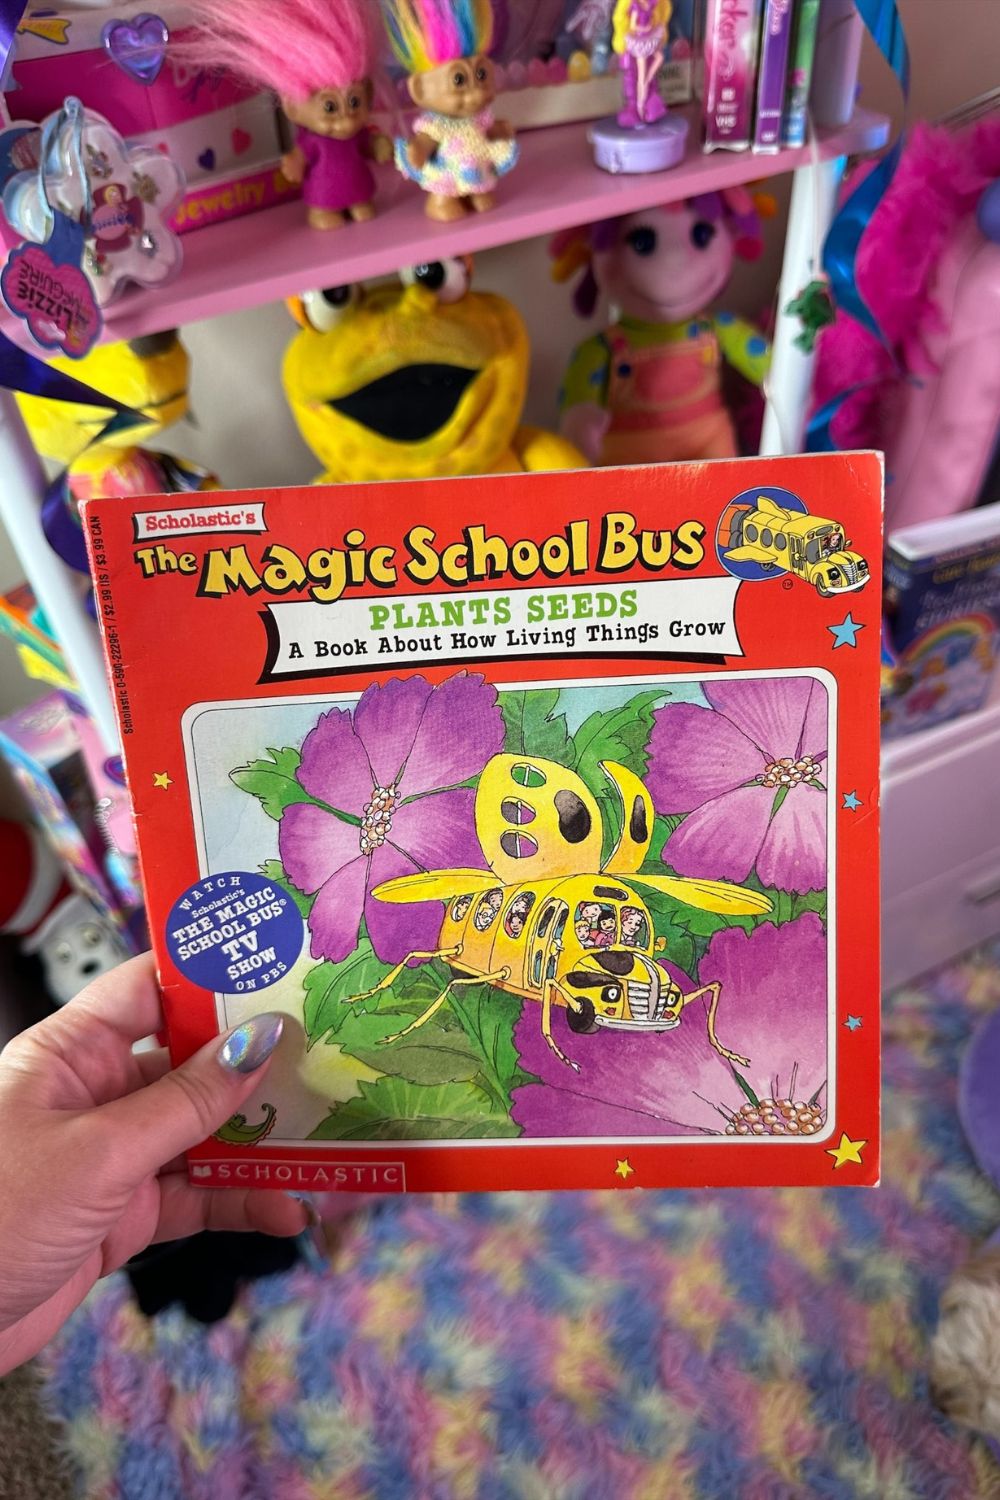 THE MAGIC SCHOOL BUS "PLANT SEEDS" BOOK*